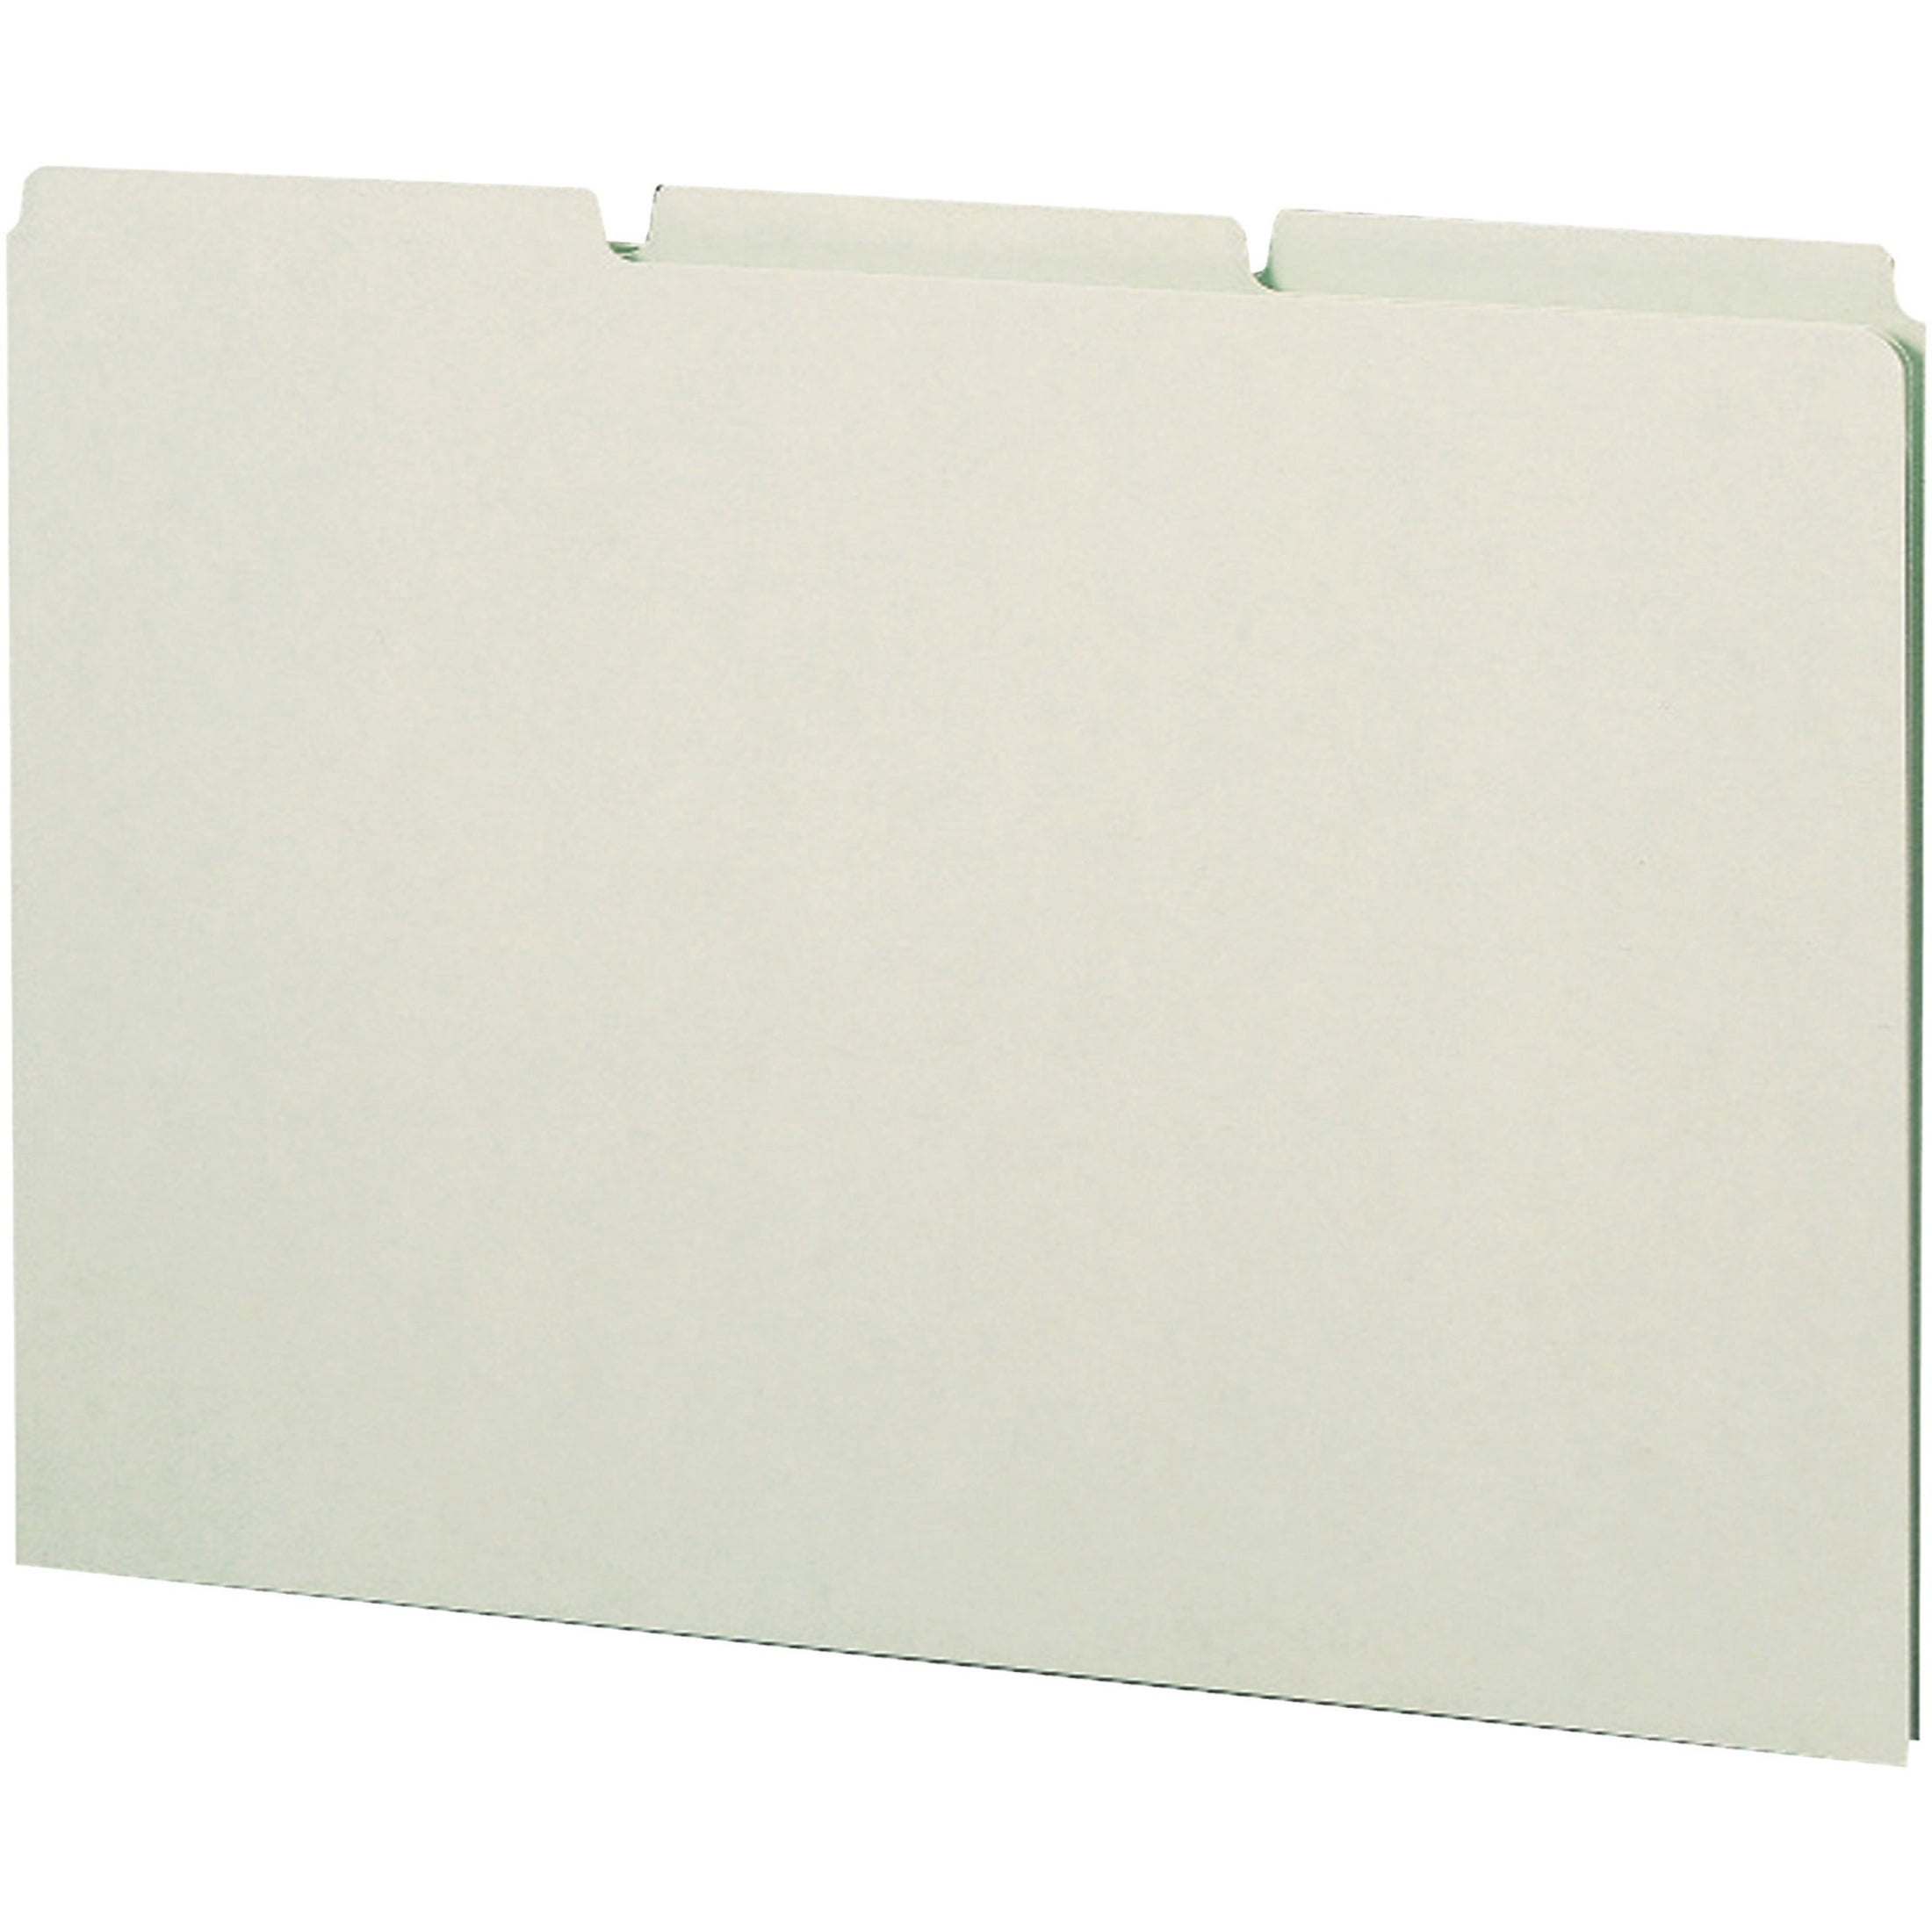 Pendaflex 1/5-cut Blank Tab Legal Size File Guides PFXPN305 